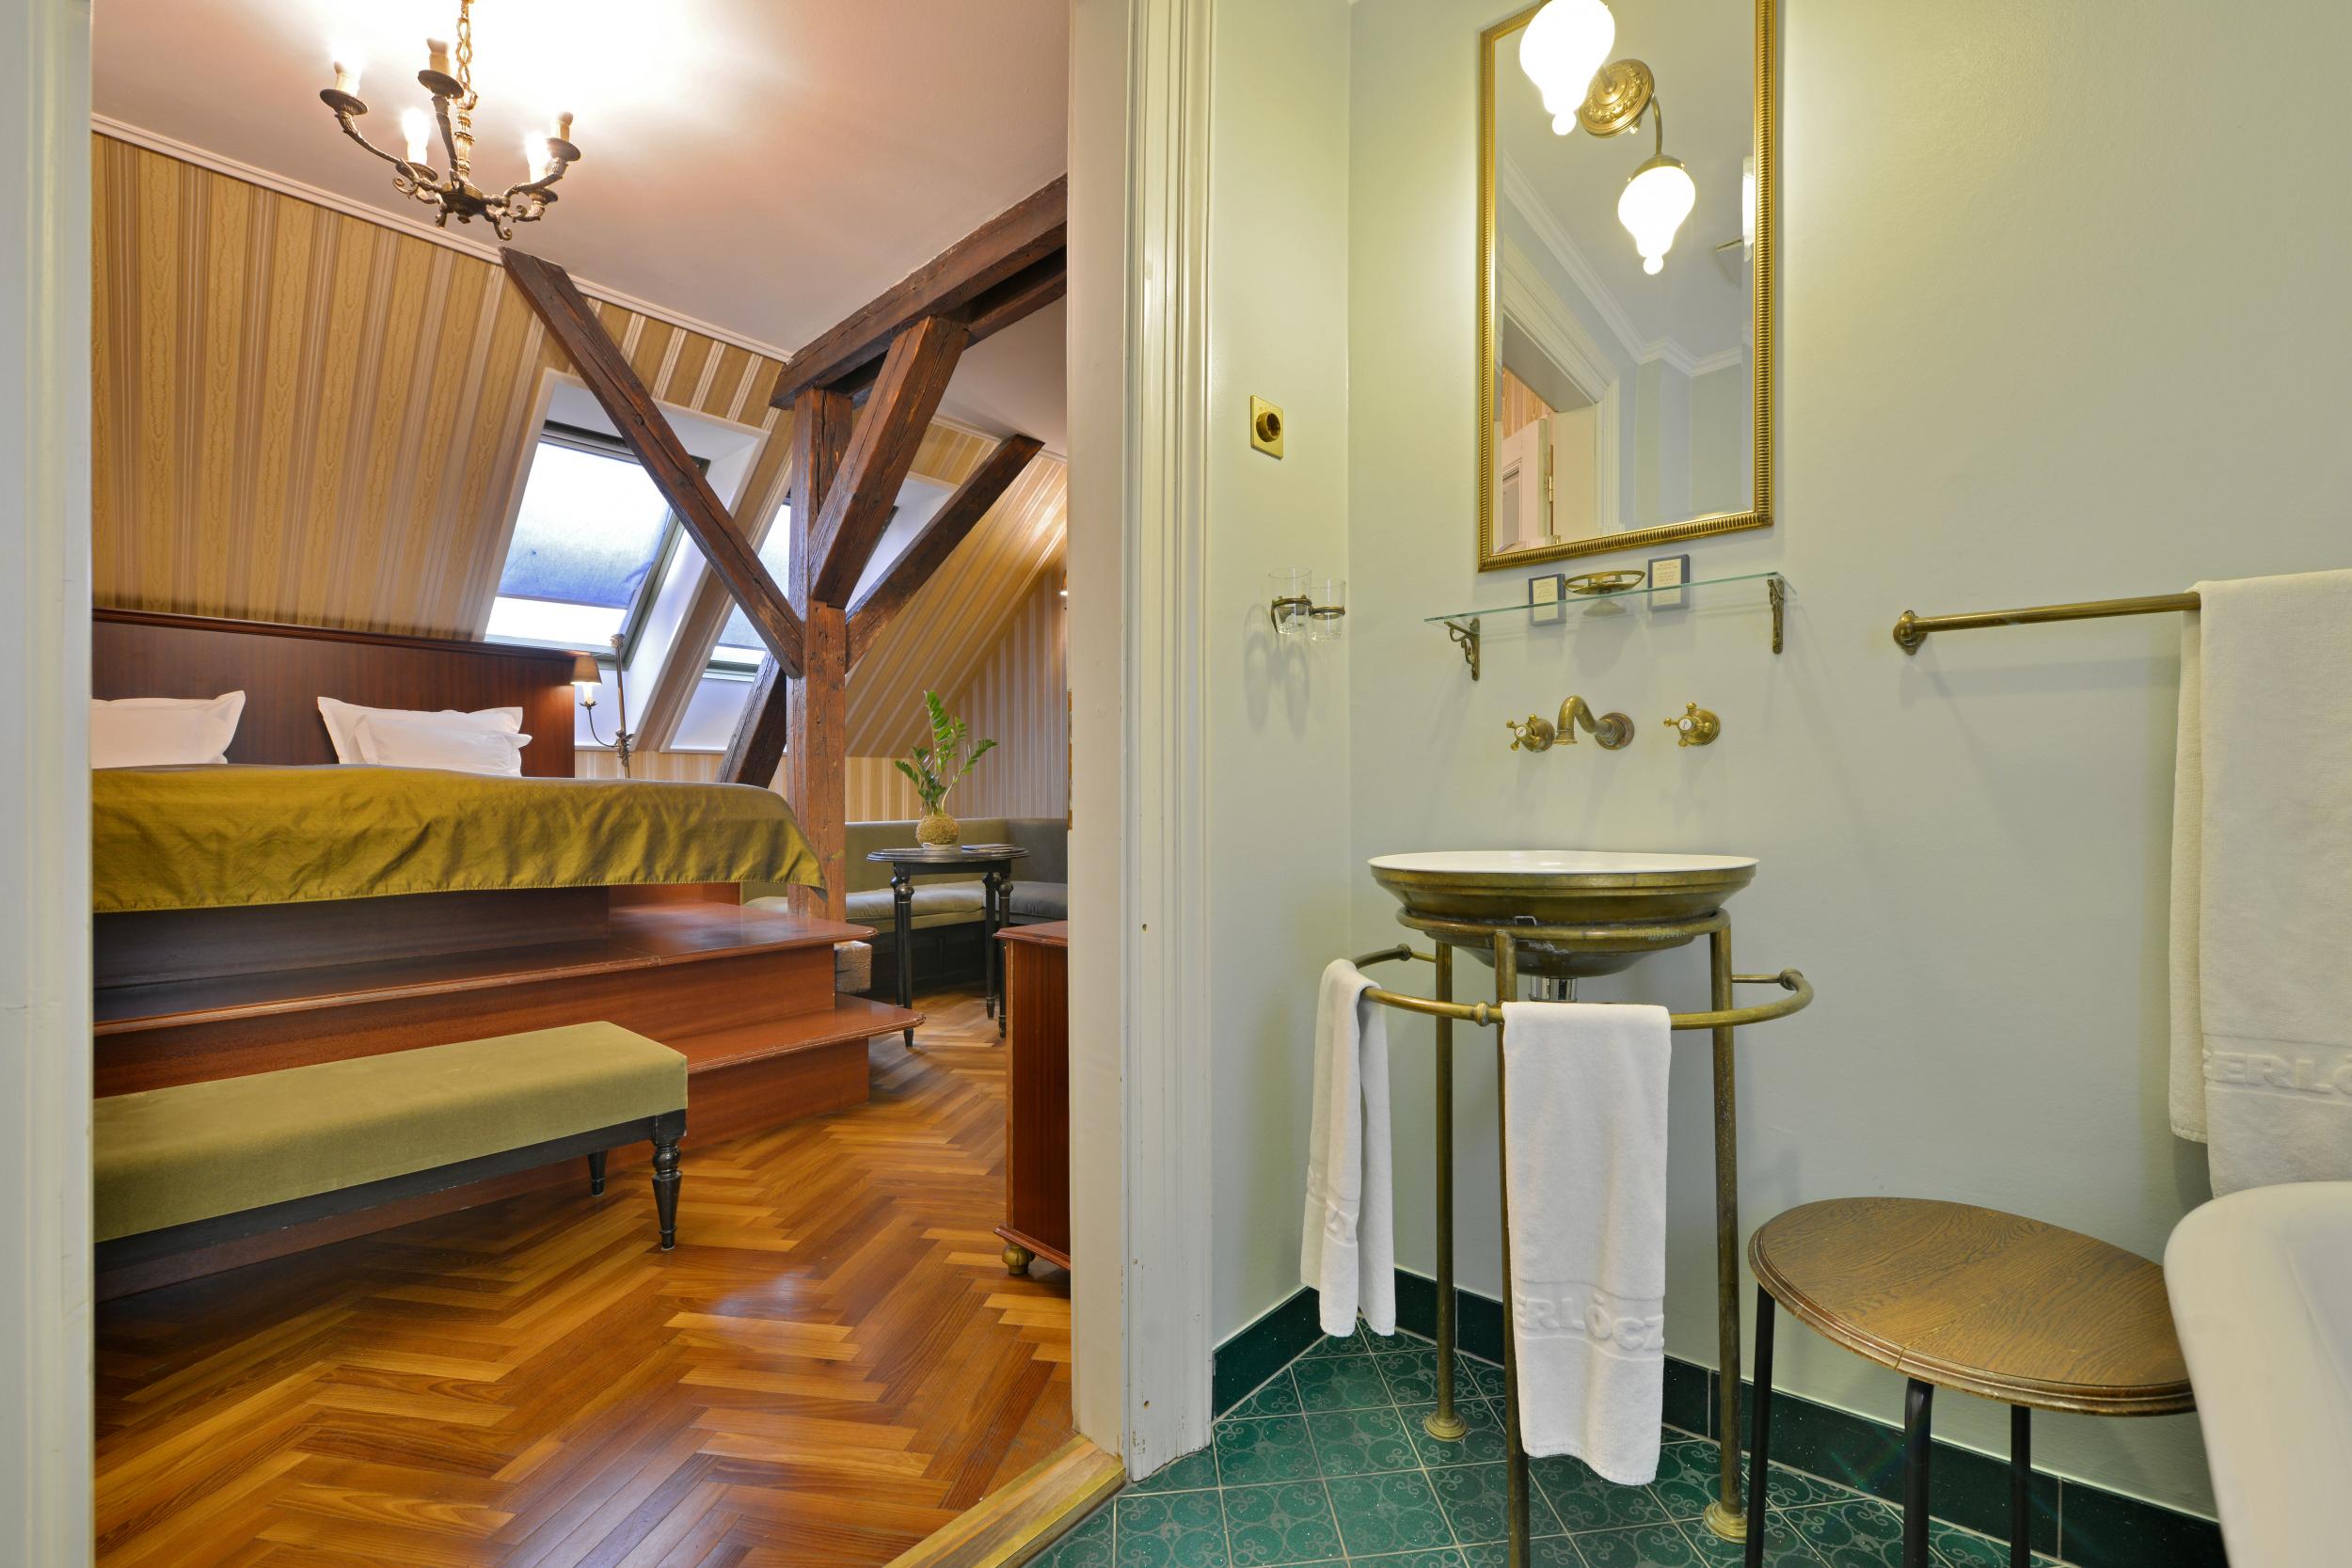 The cool design at Gerlóczy Rooms de Lux belies its budget rates